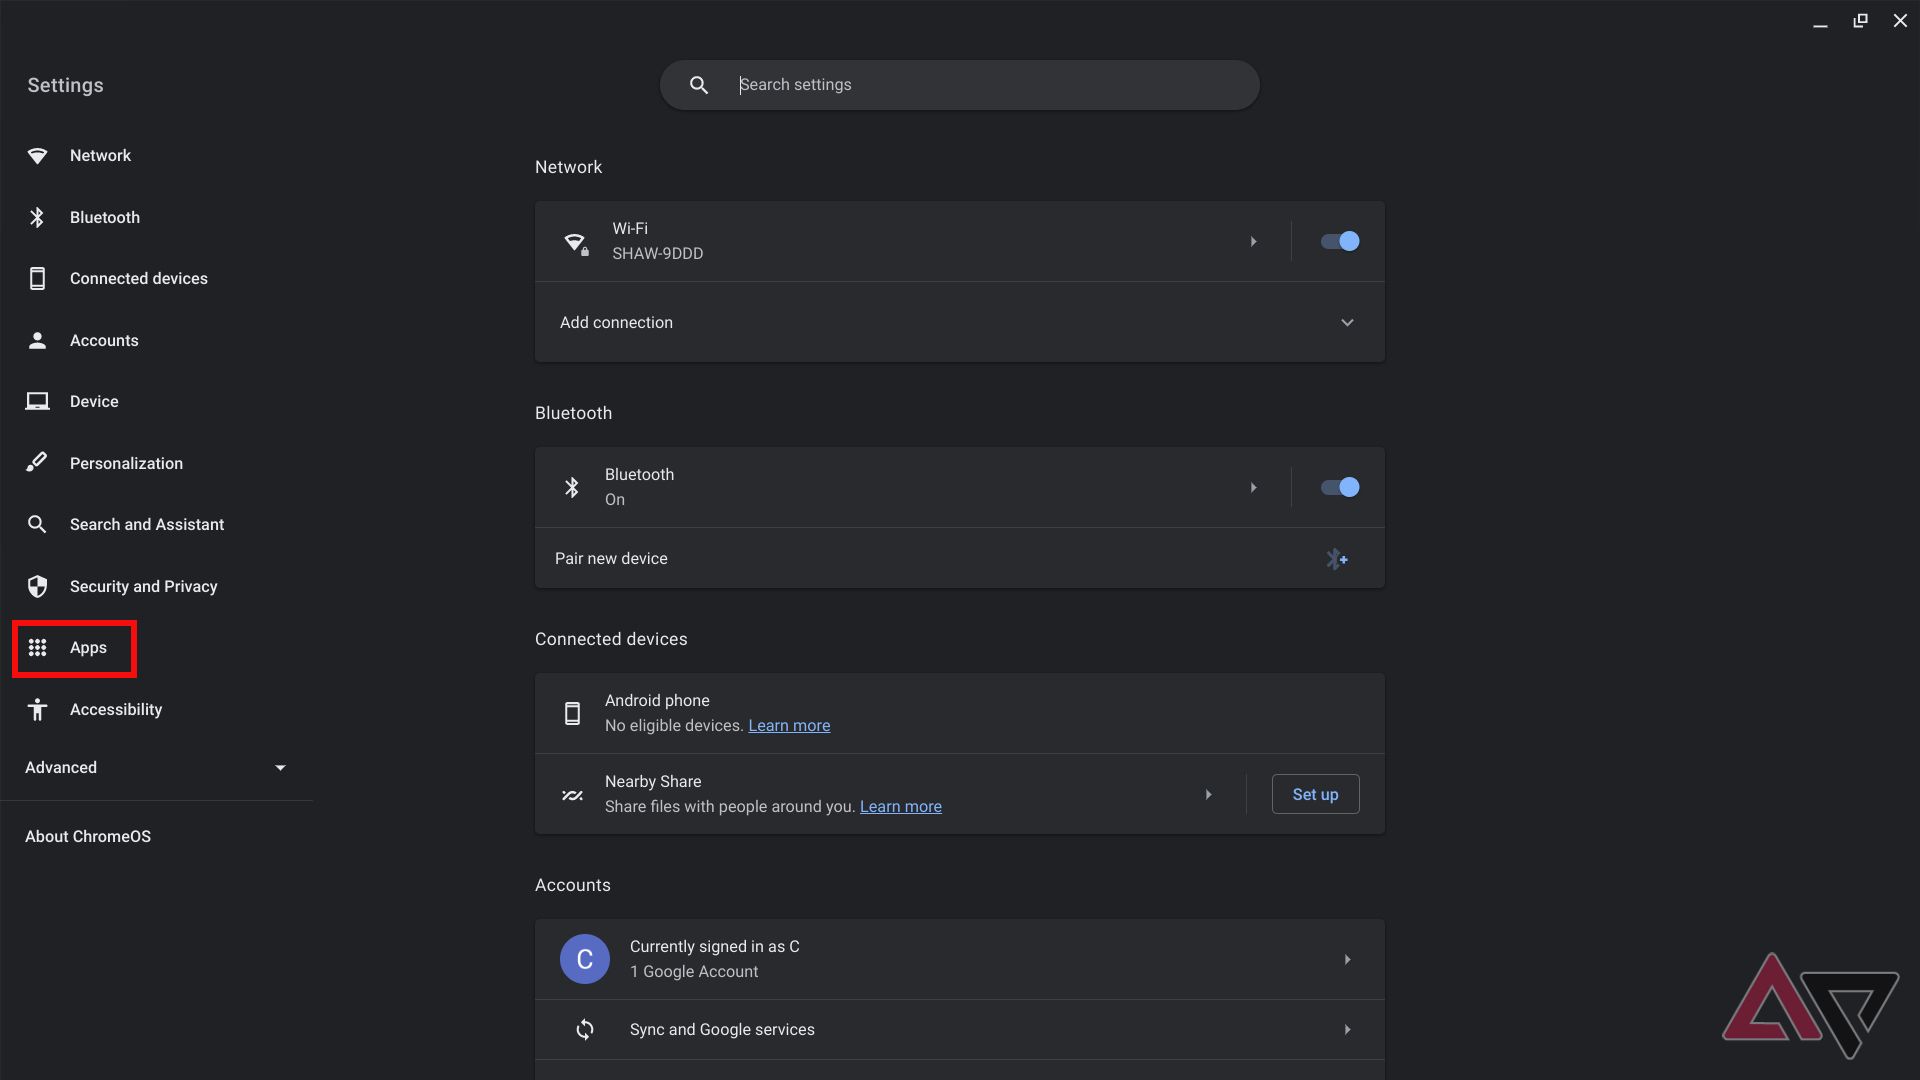 A screenshot of the Settings menu in ChromeOS